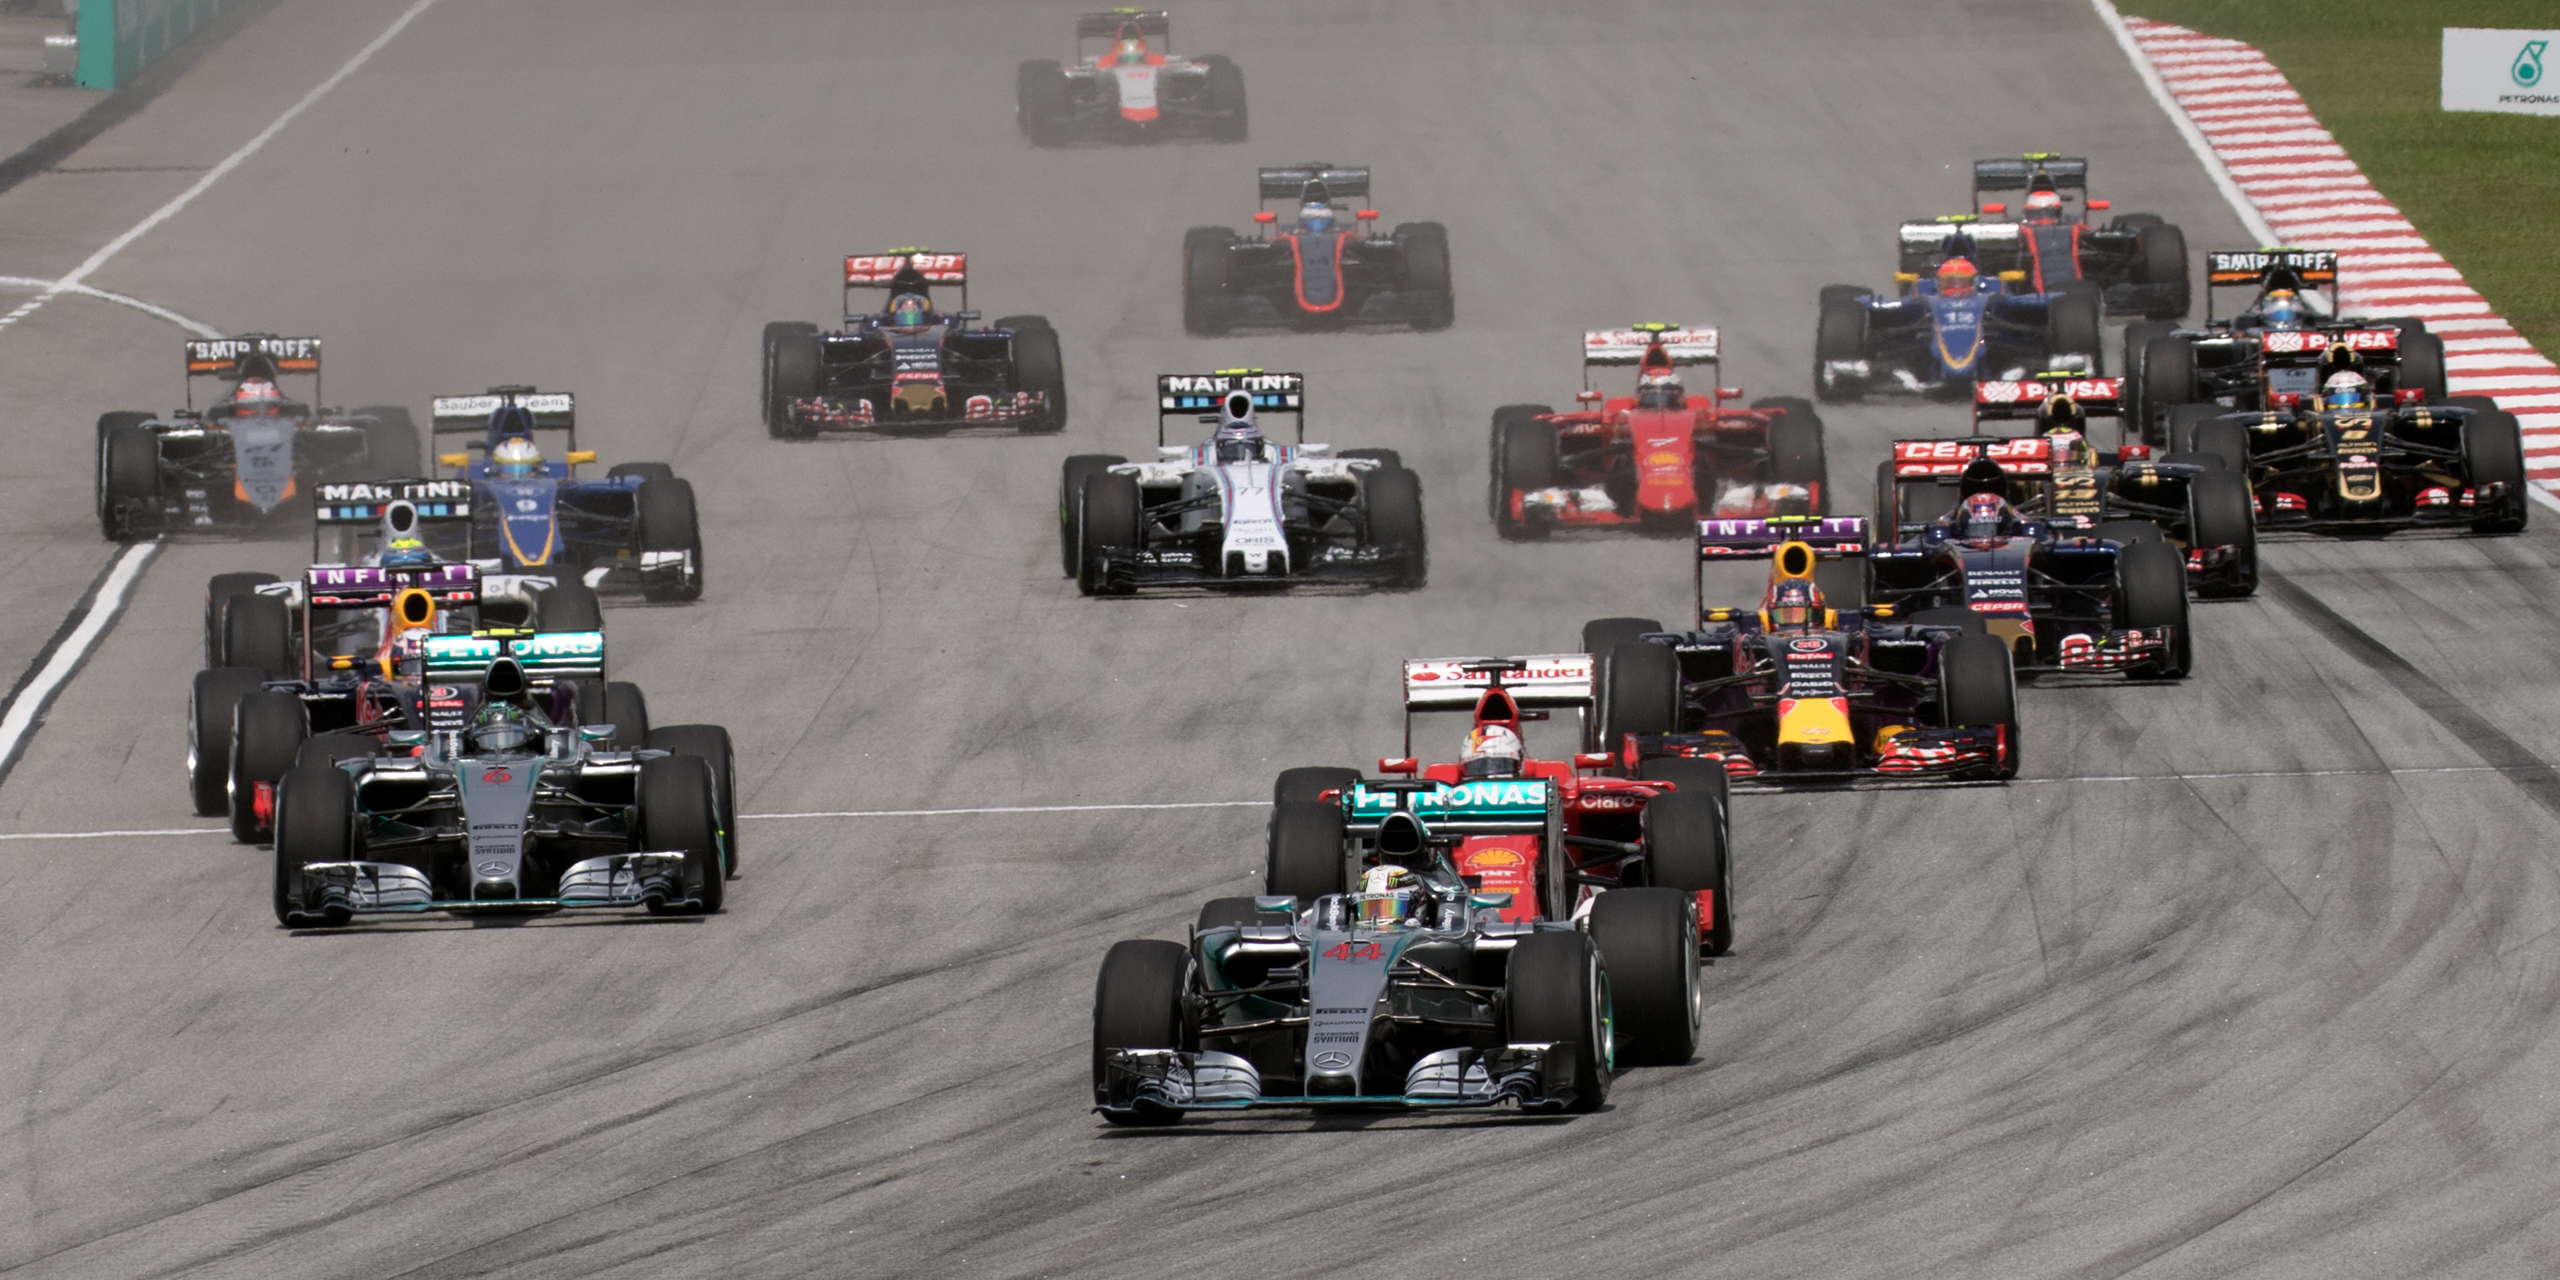 2015 Malaysian GP opening lap